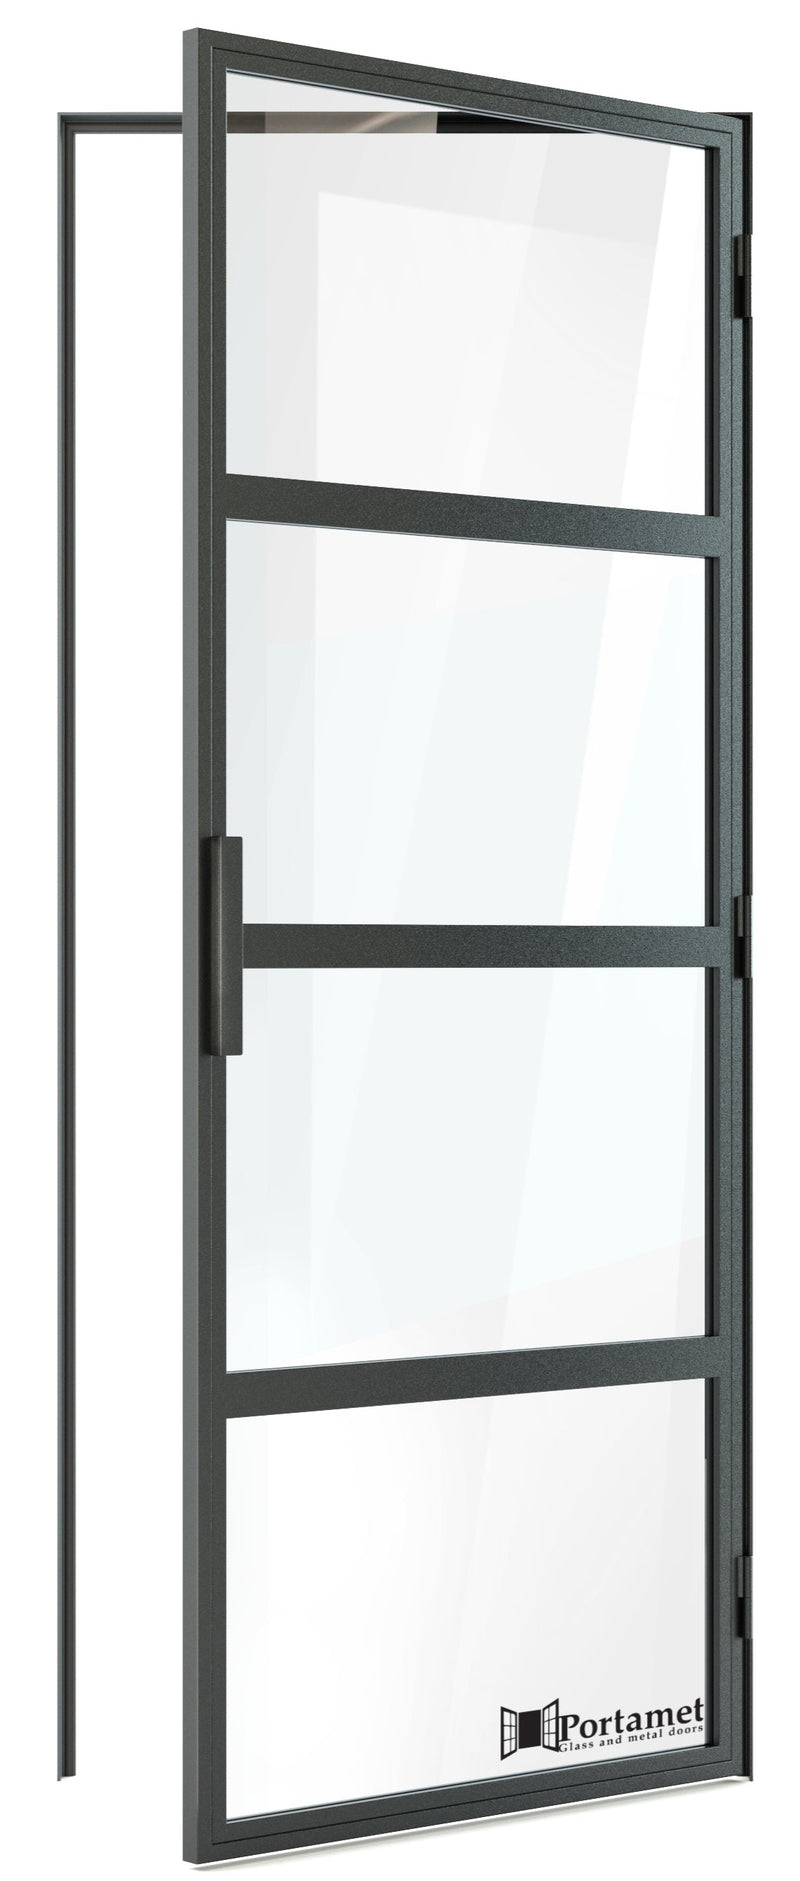 Portamet by Sfarzo - Roma Classic Single Glazed Steel Hinged Door with Frame